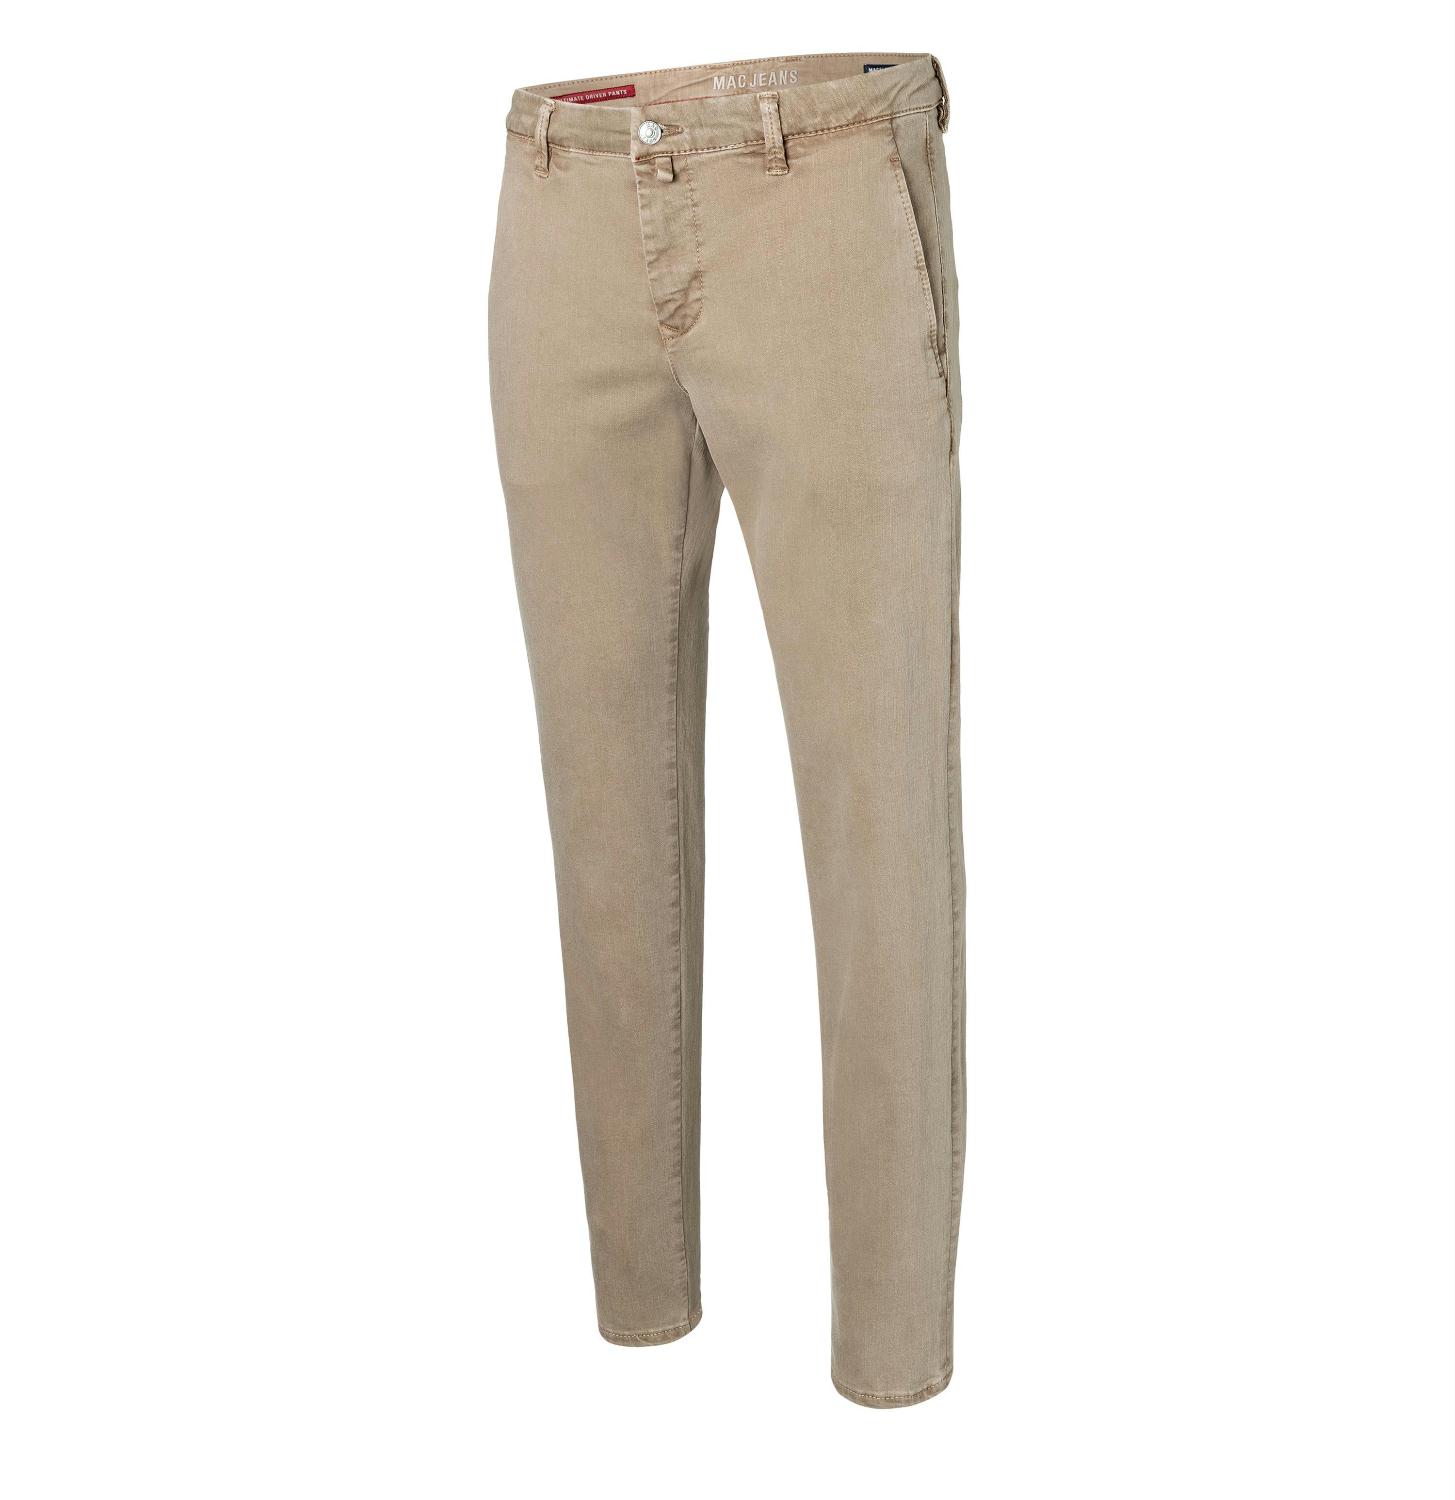 mac-jeans-driver-pants-bp_2w8g_8nf_rmw8bo